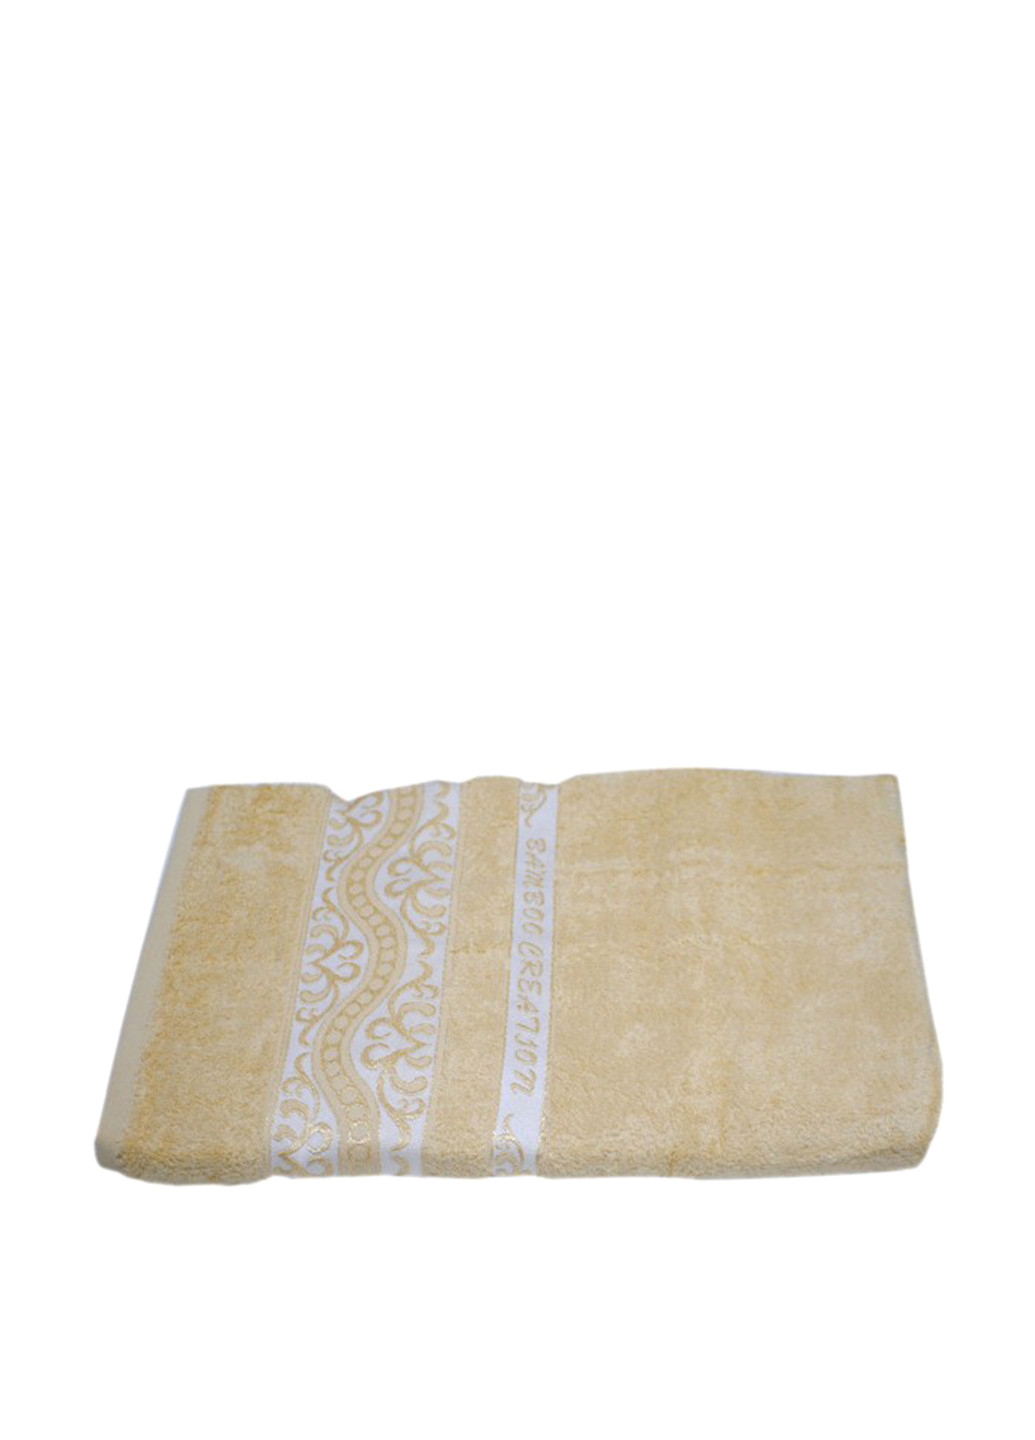 JULIA полотенце, 70х140 см орнамент песочный производство - Турция